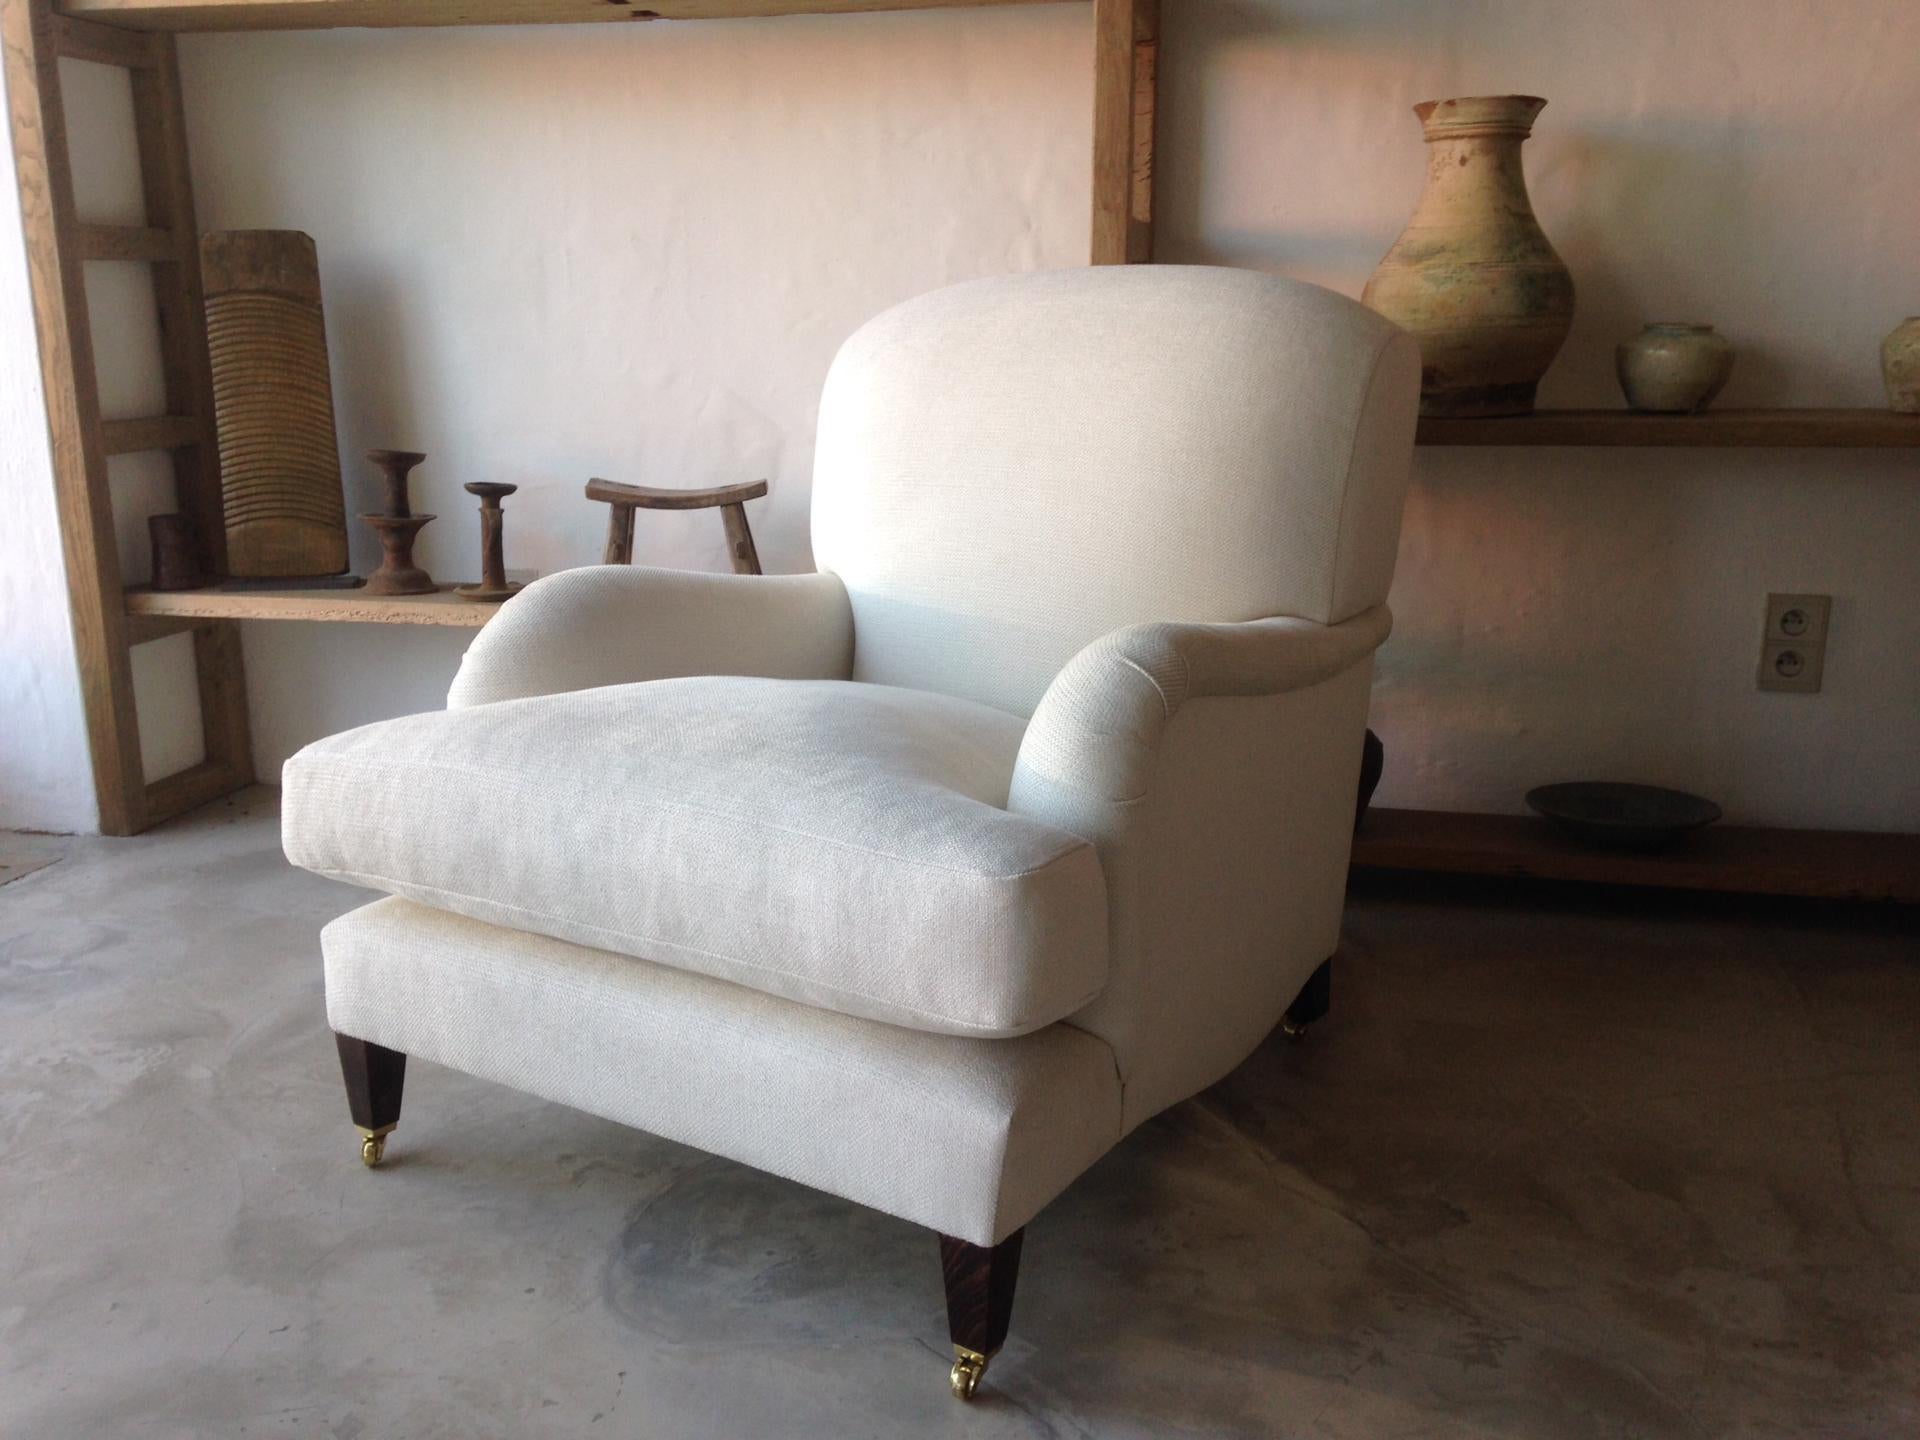 Belge The Howard, fauteuil en lin belge fabriqué sur mesure en vente